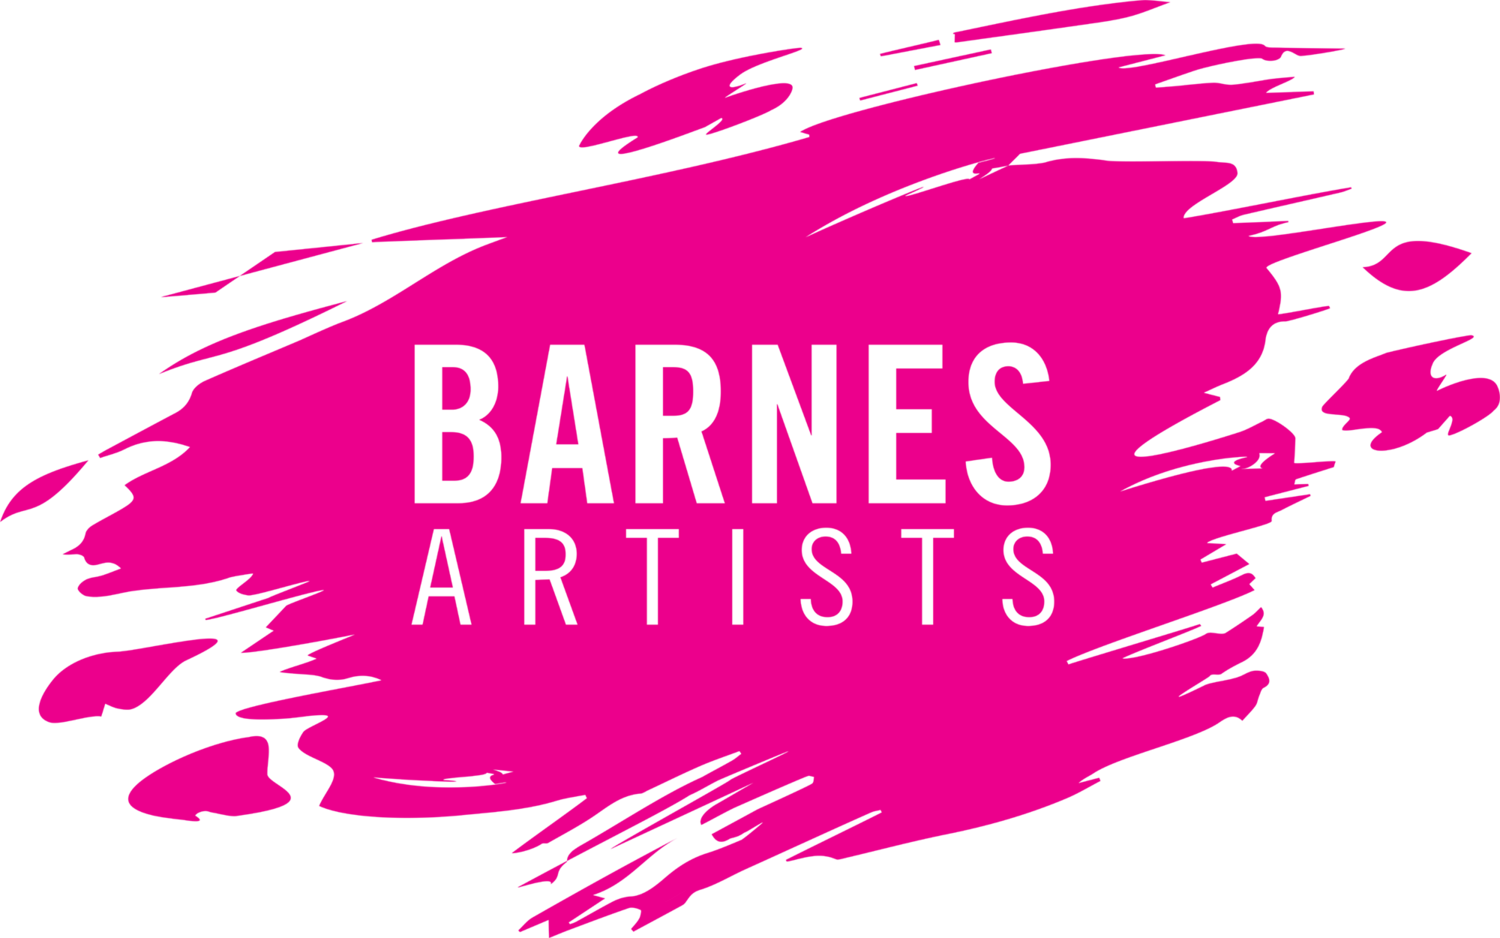 Barnes artists